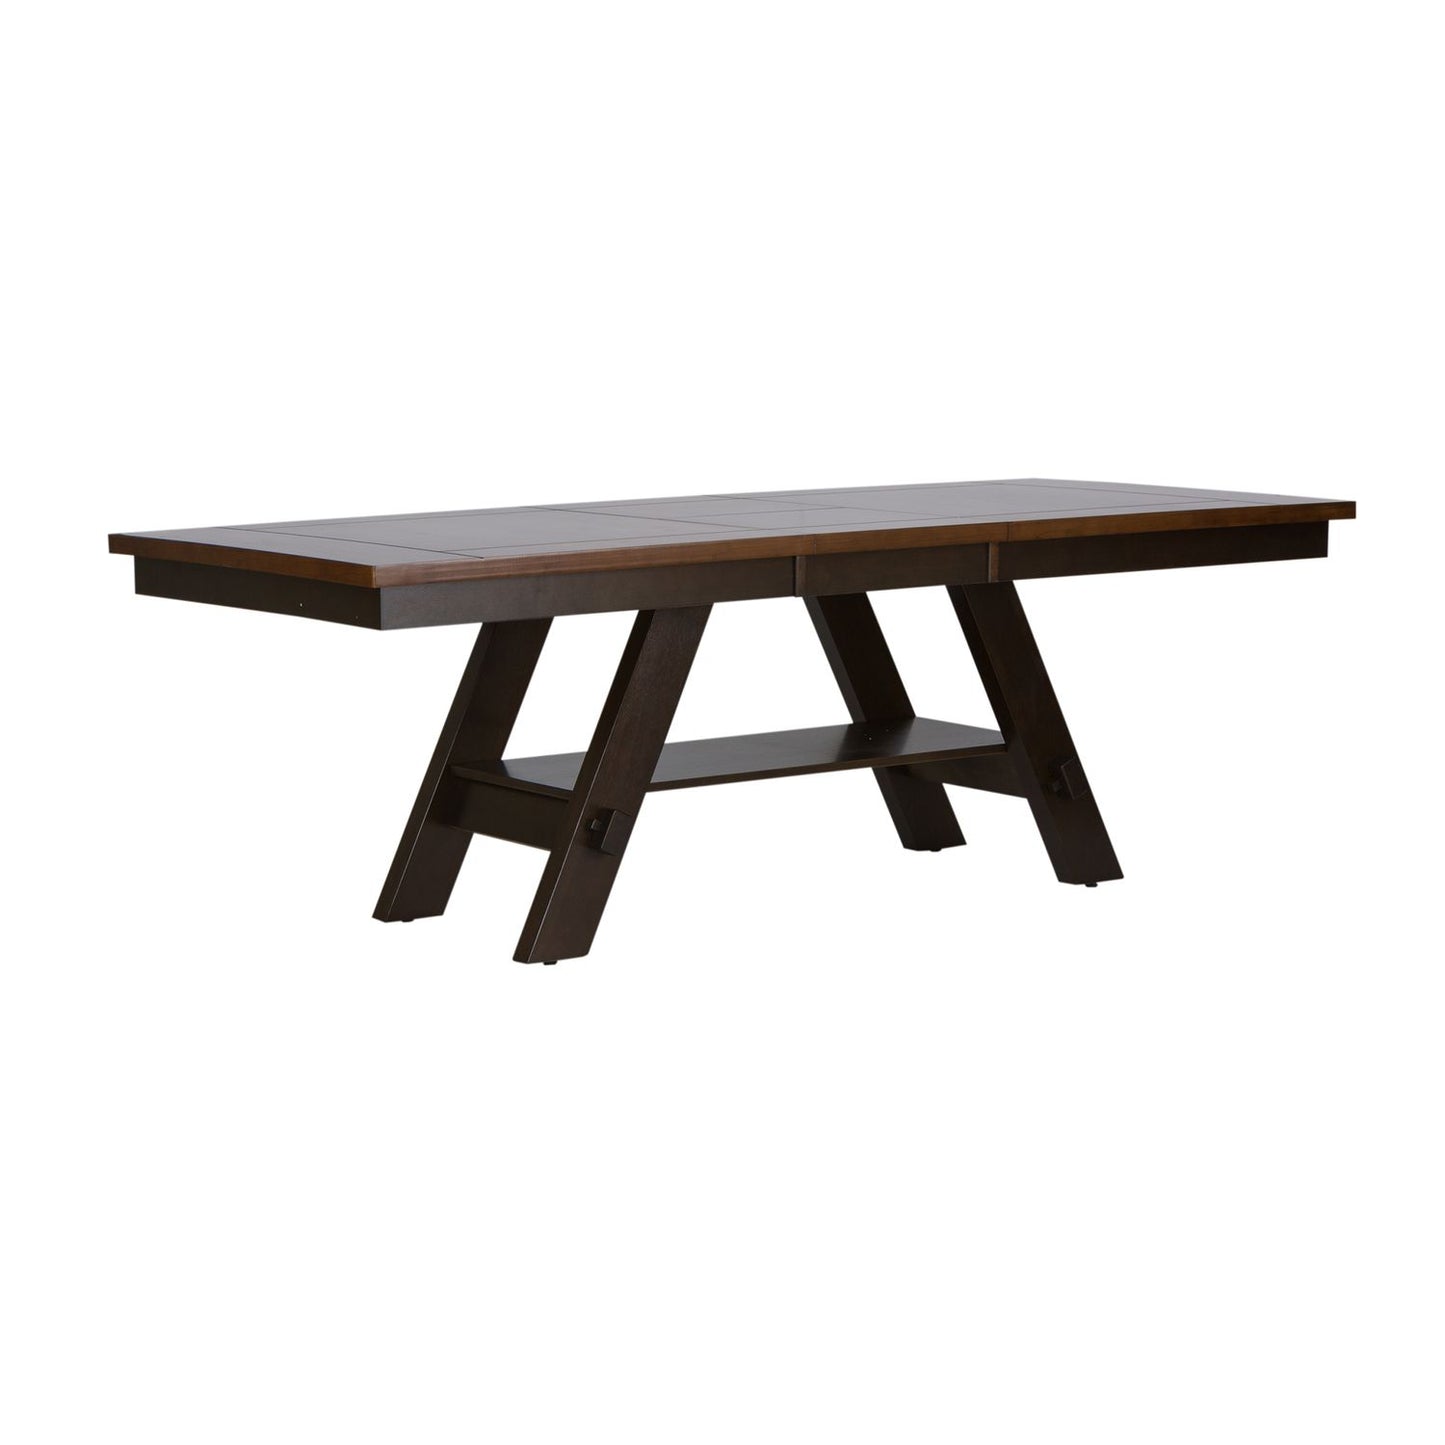 Lawson - Rectangular Table